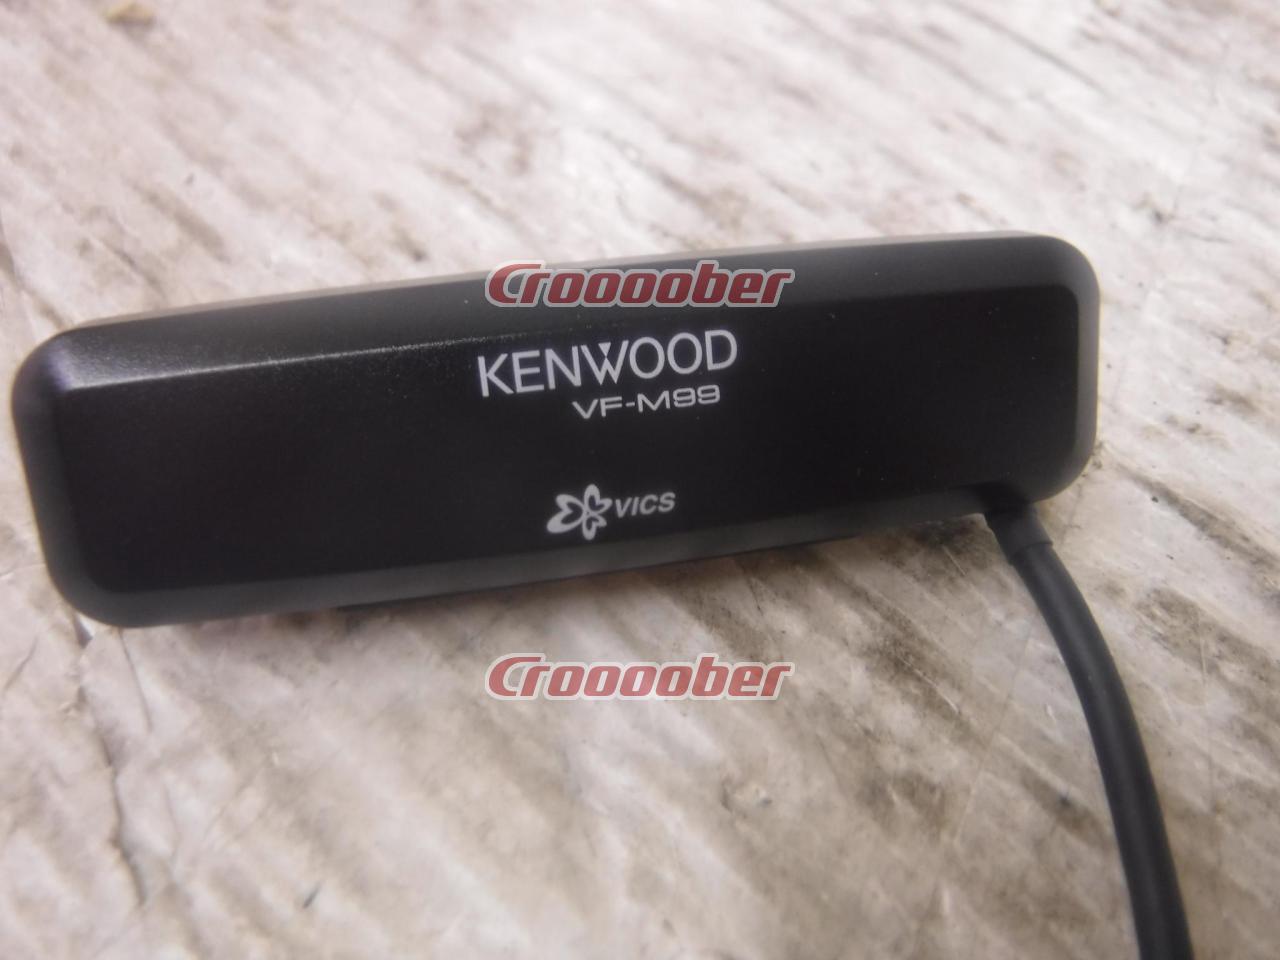 DC plusケンウッド KENWOOD 電波ビーコンVICSユニット 光 VF-M99